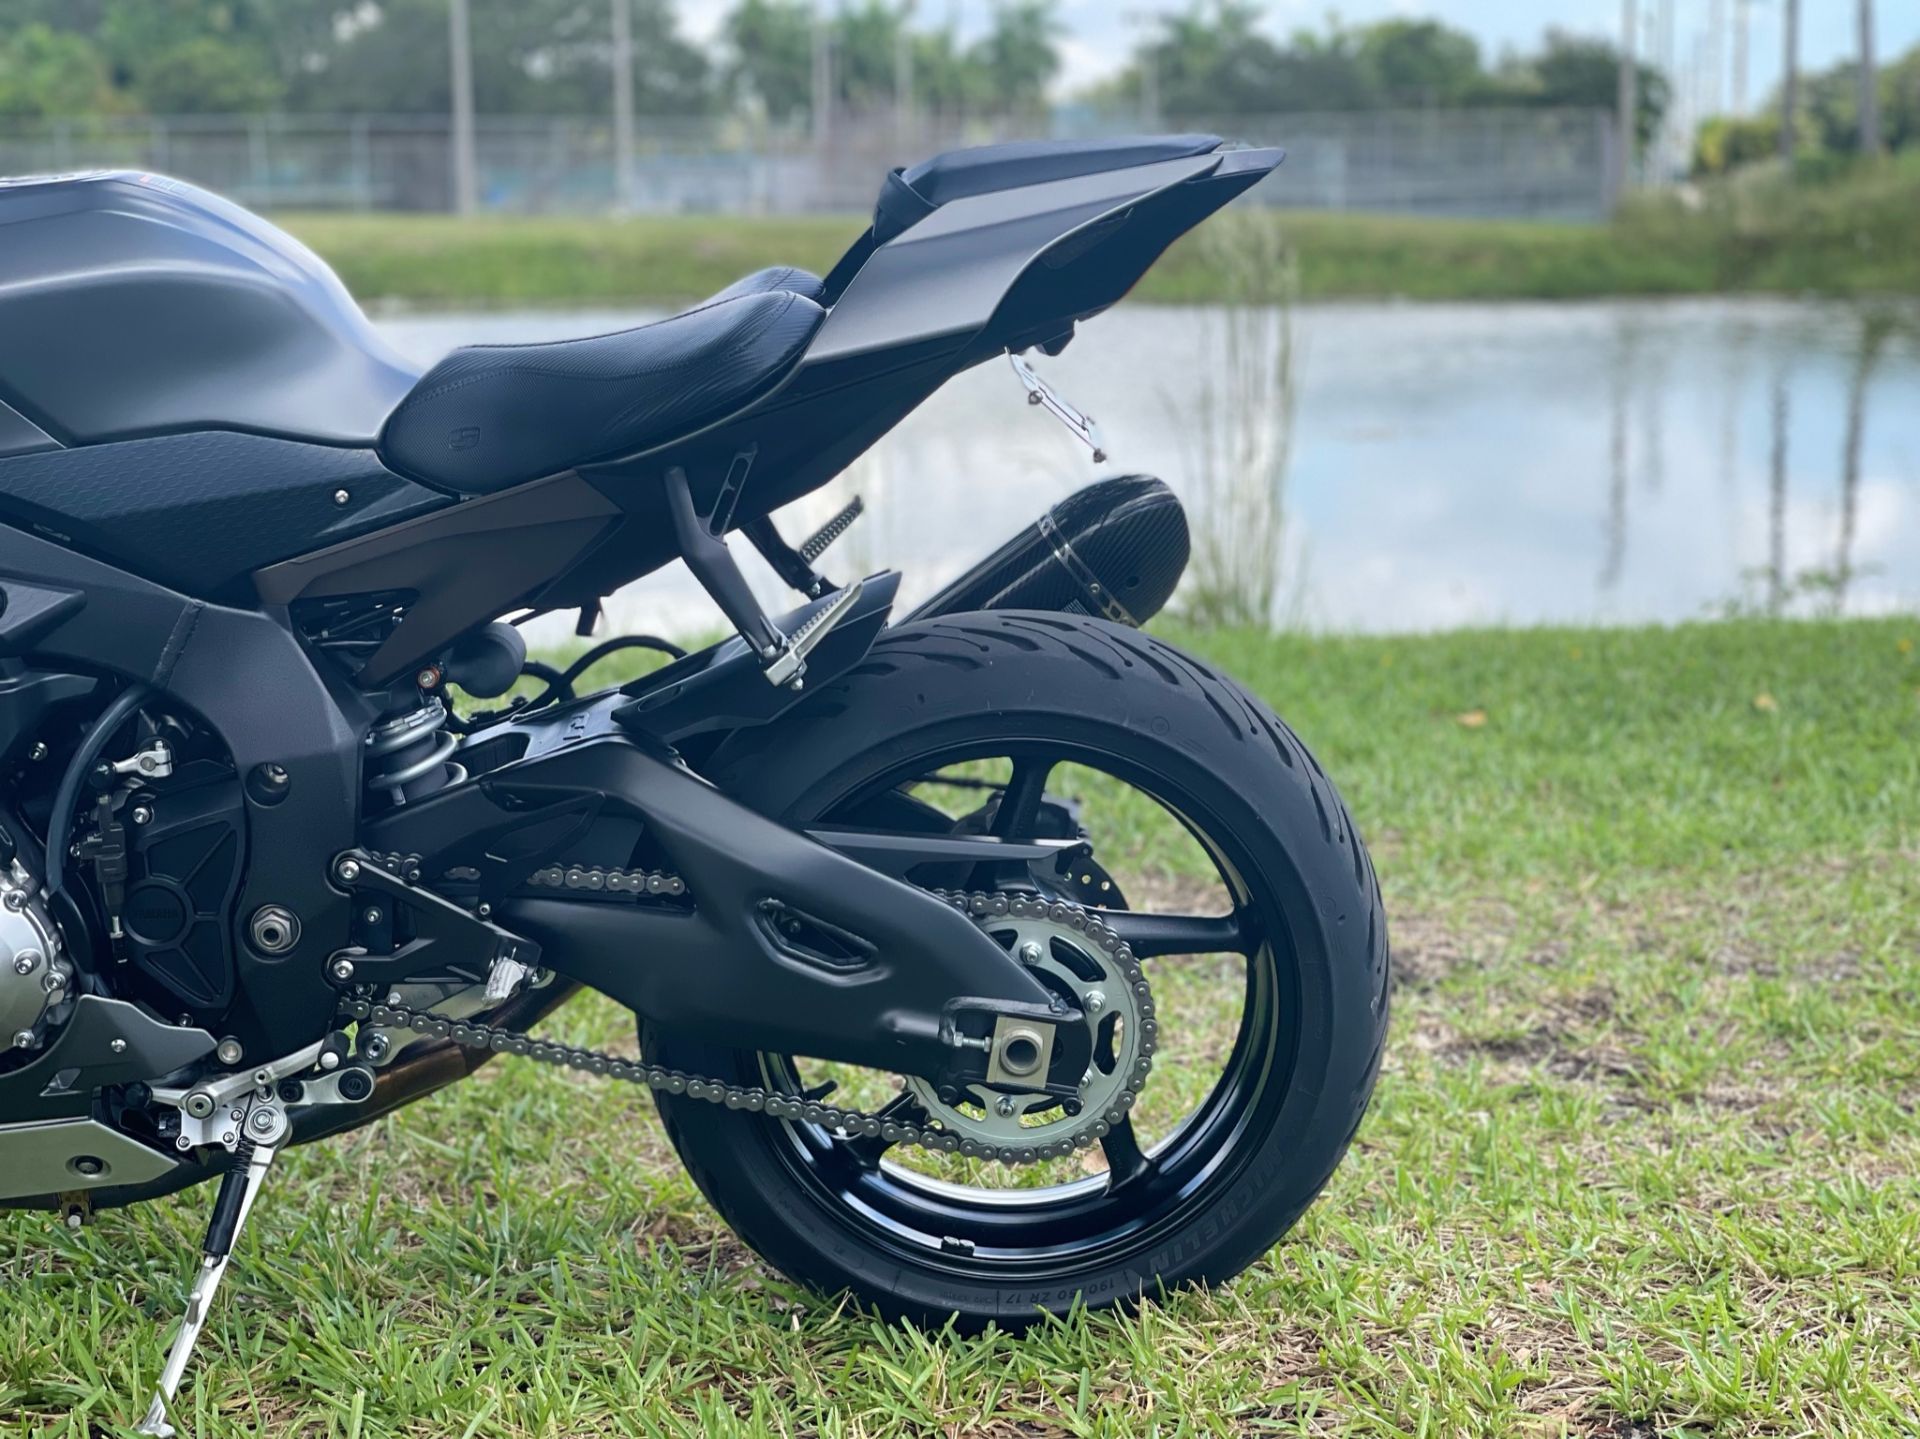 2016 Yamaha YZF-R1S in North Miami Beach, Florida - Photo 22